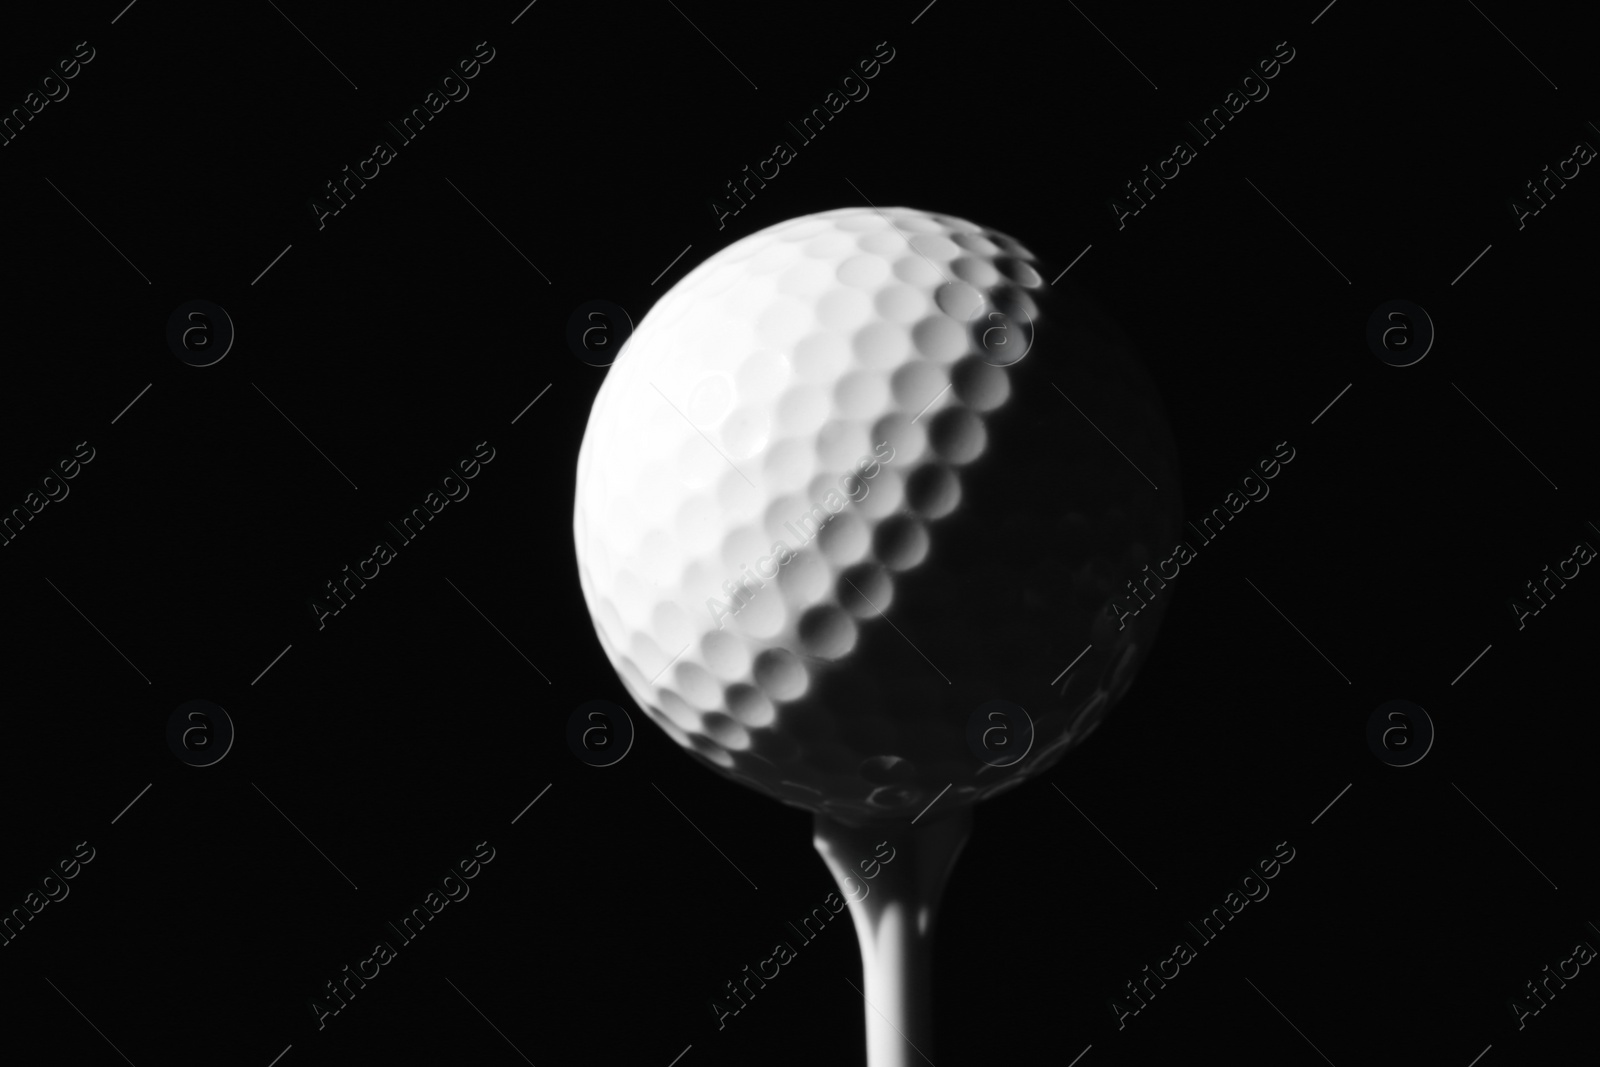 Photo of Golf ball on tee against dark background